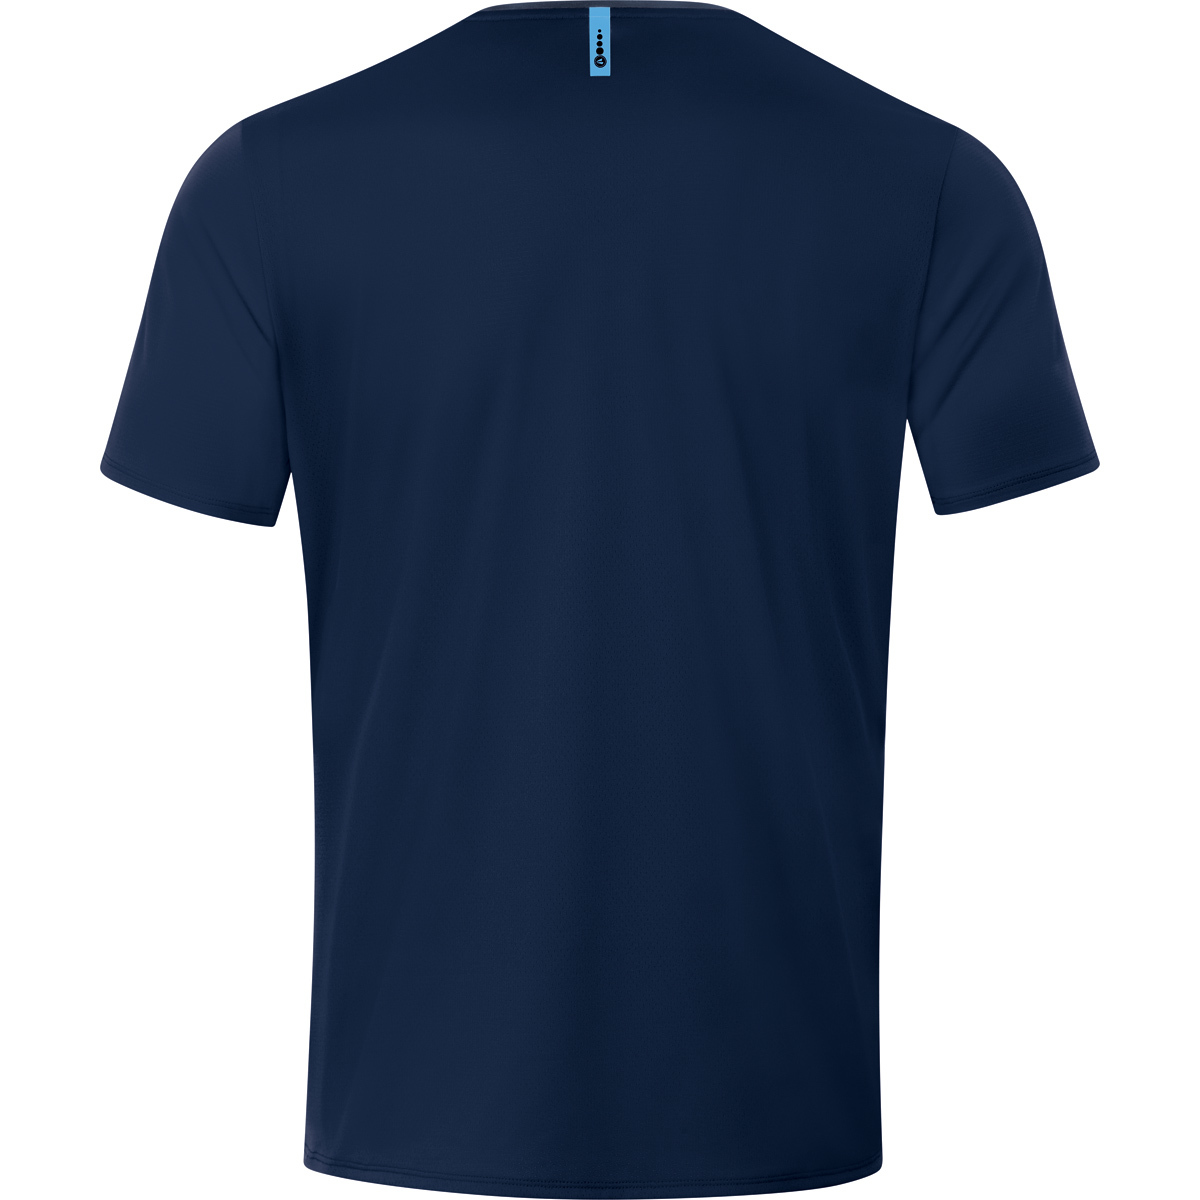 2.0 T-Shirt 116, 6120 marine/darkblue/skyblue, Gr. Kinder, JAKO Champ